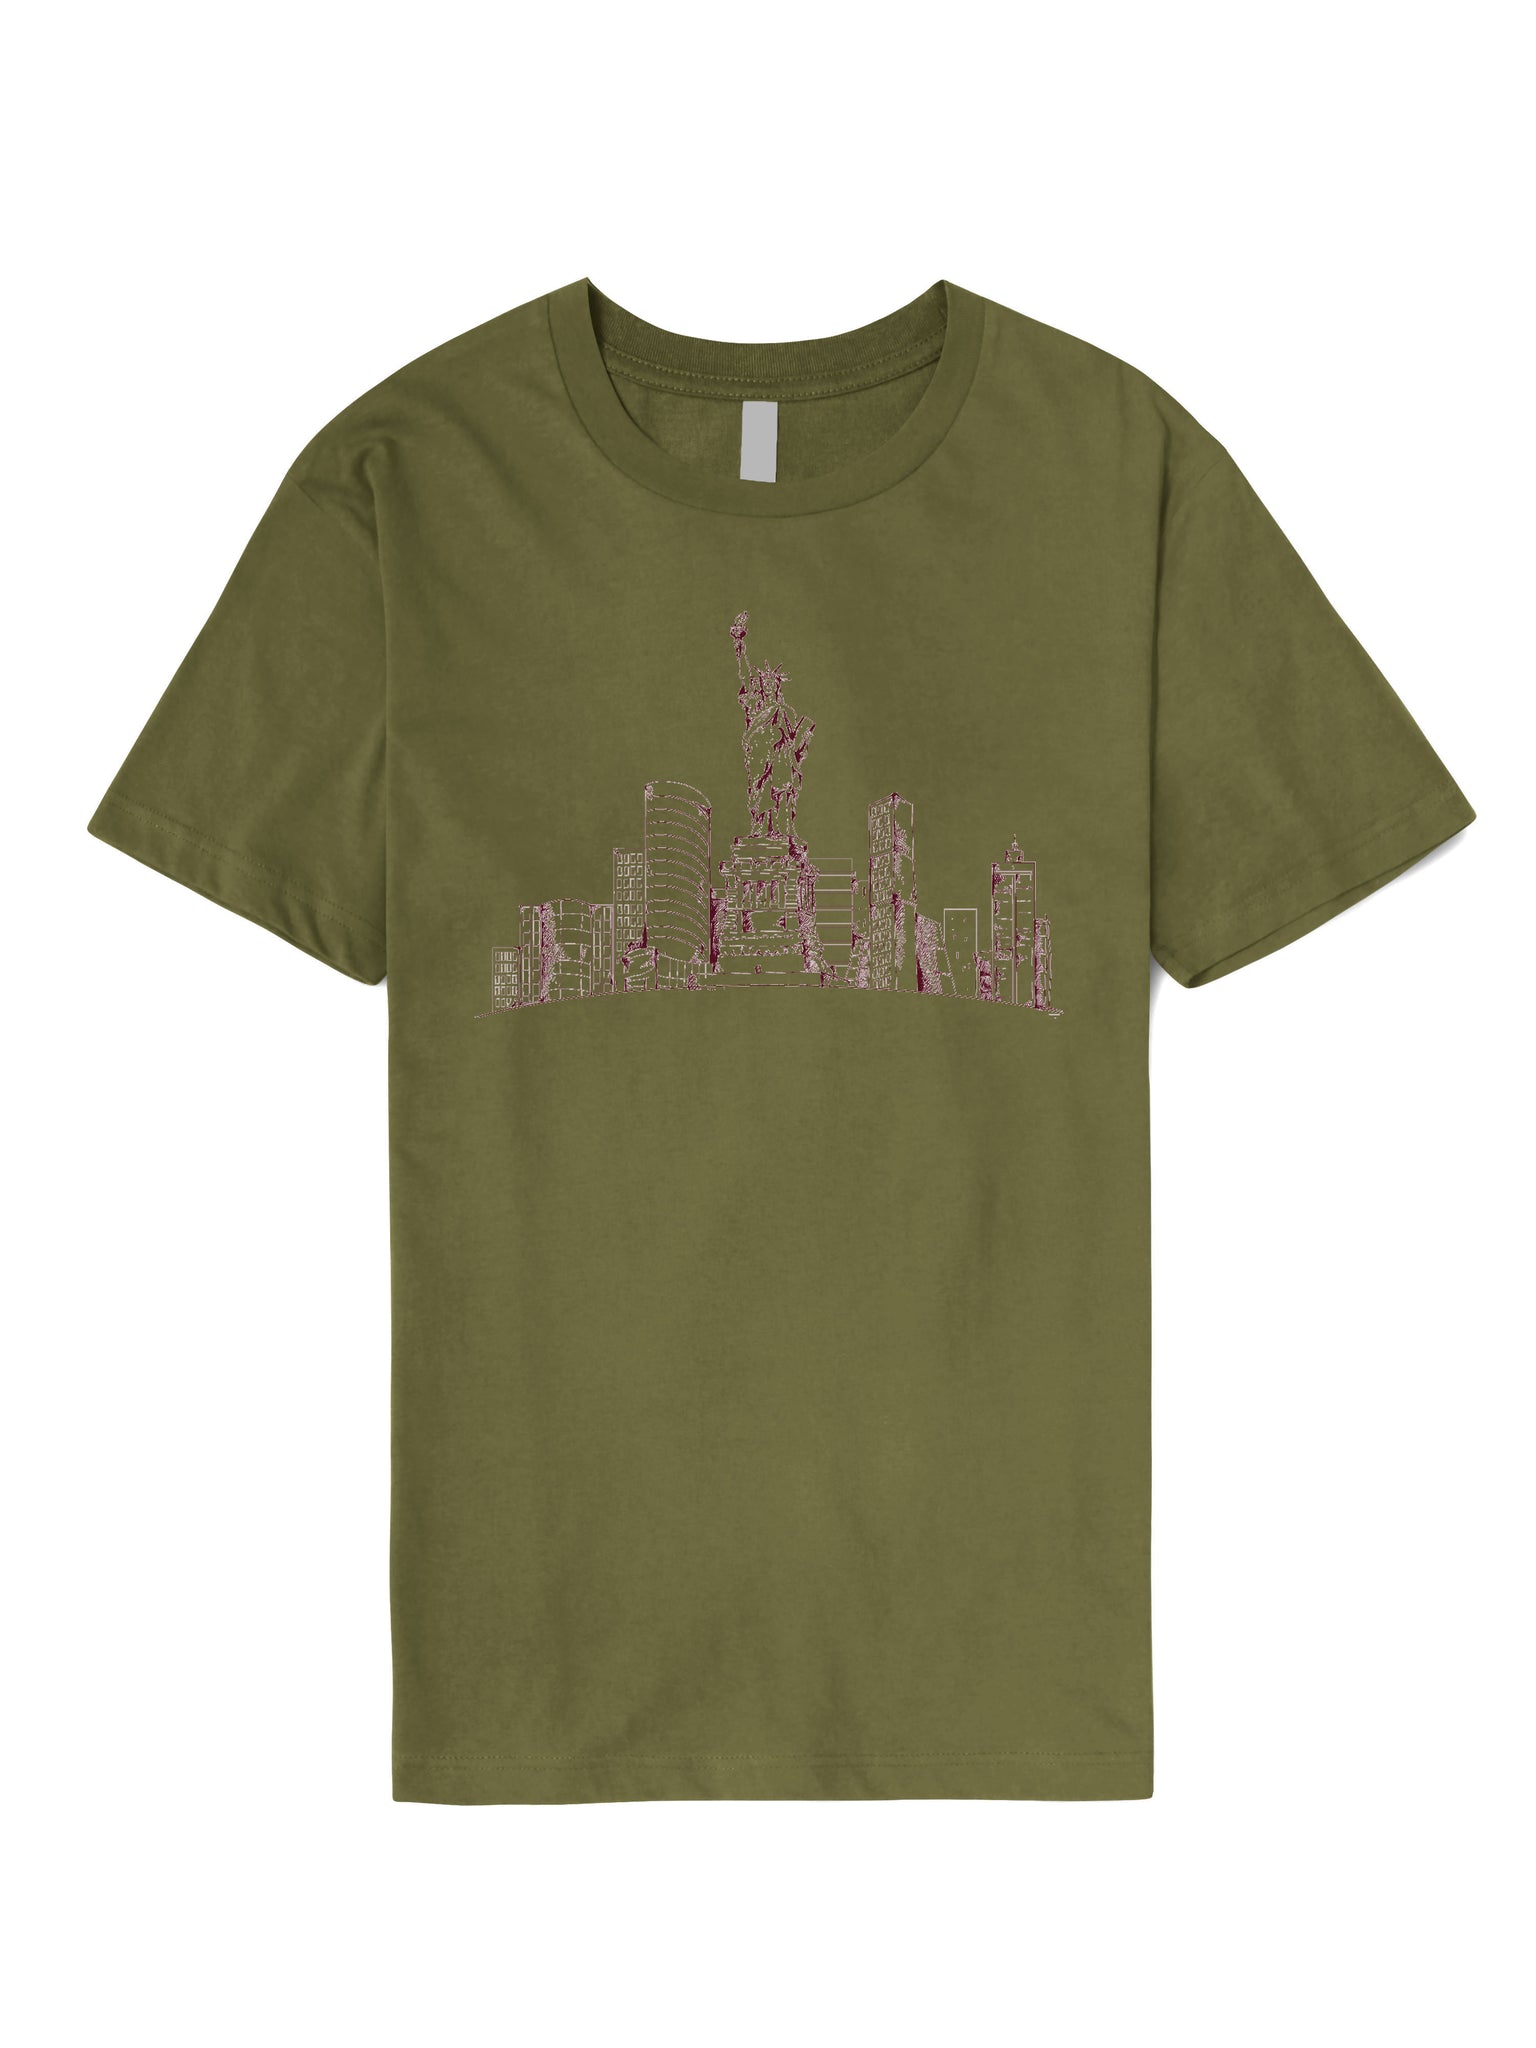 New York City Skyline T-Shirt Tops T | and Hat Graphic & Shirt - Tank Beyond